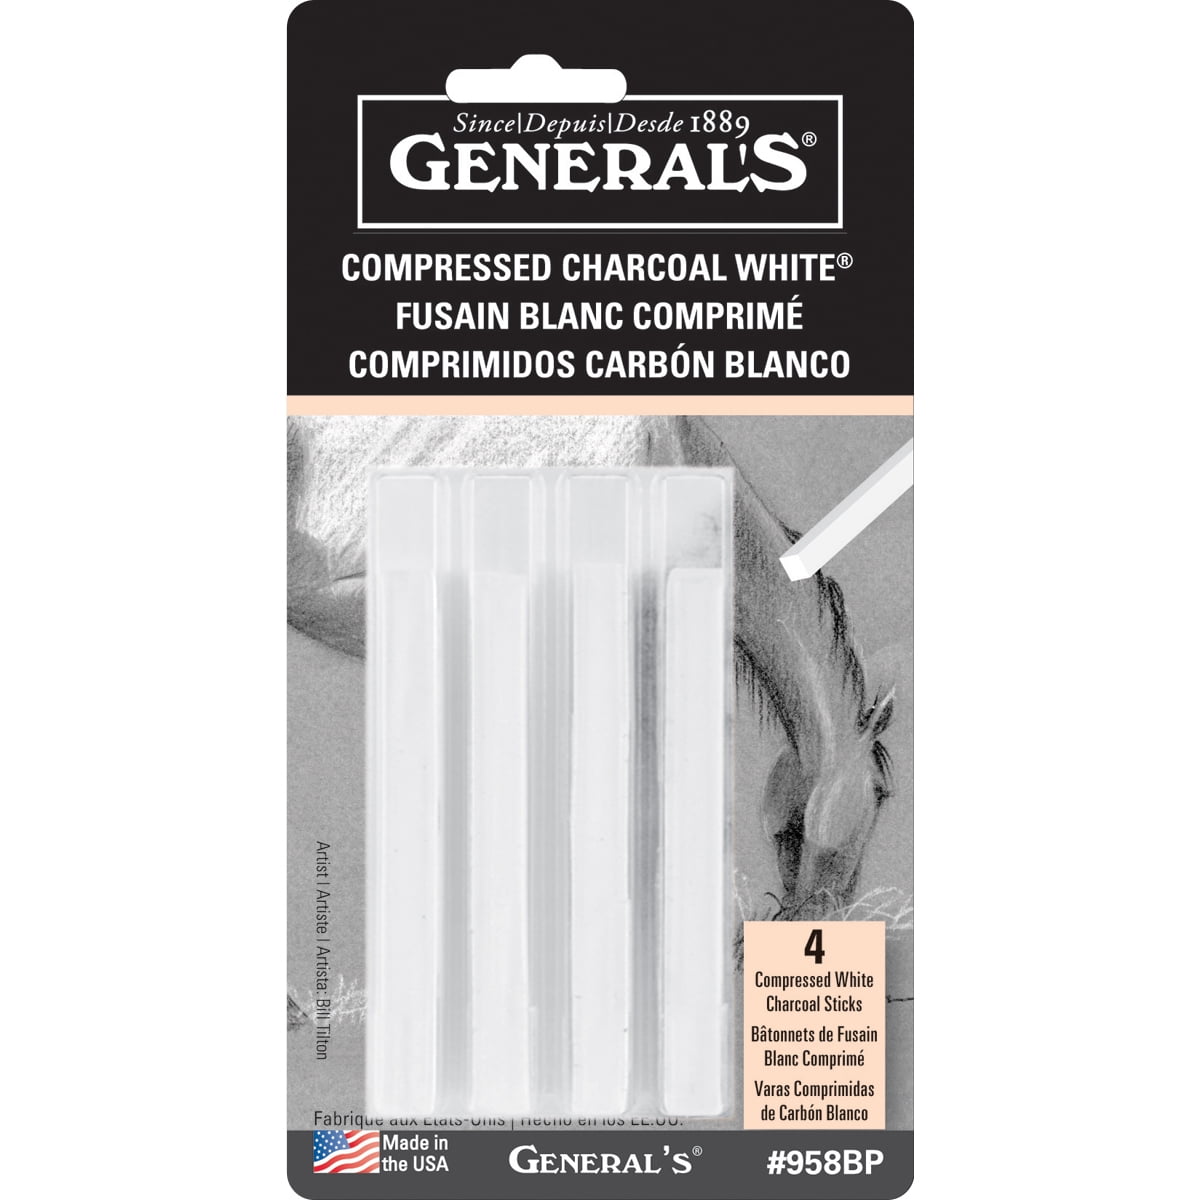 Generals Compressed Charcoal